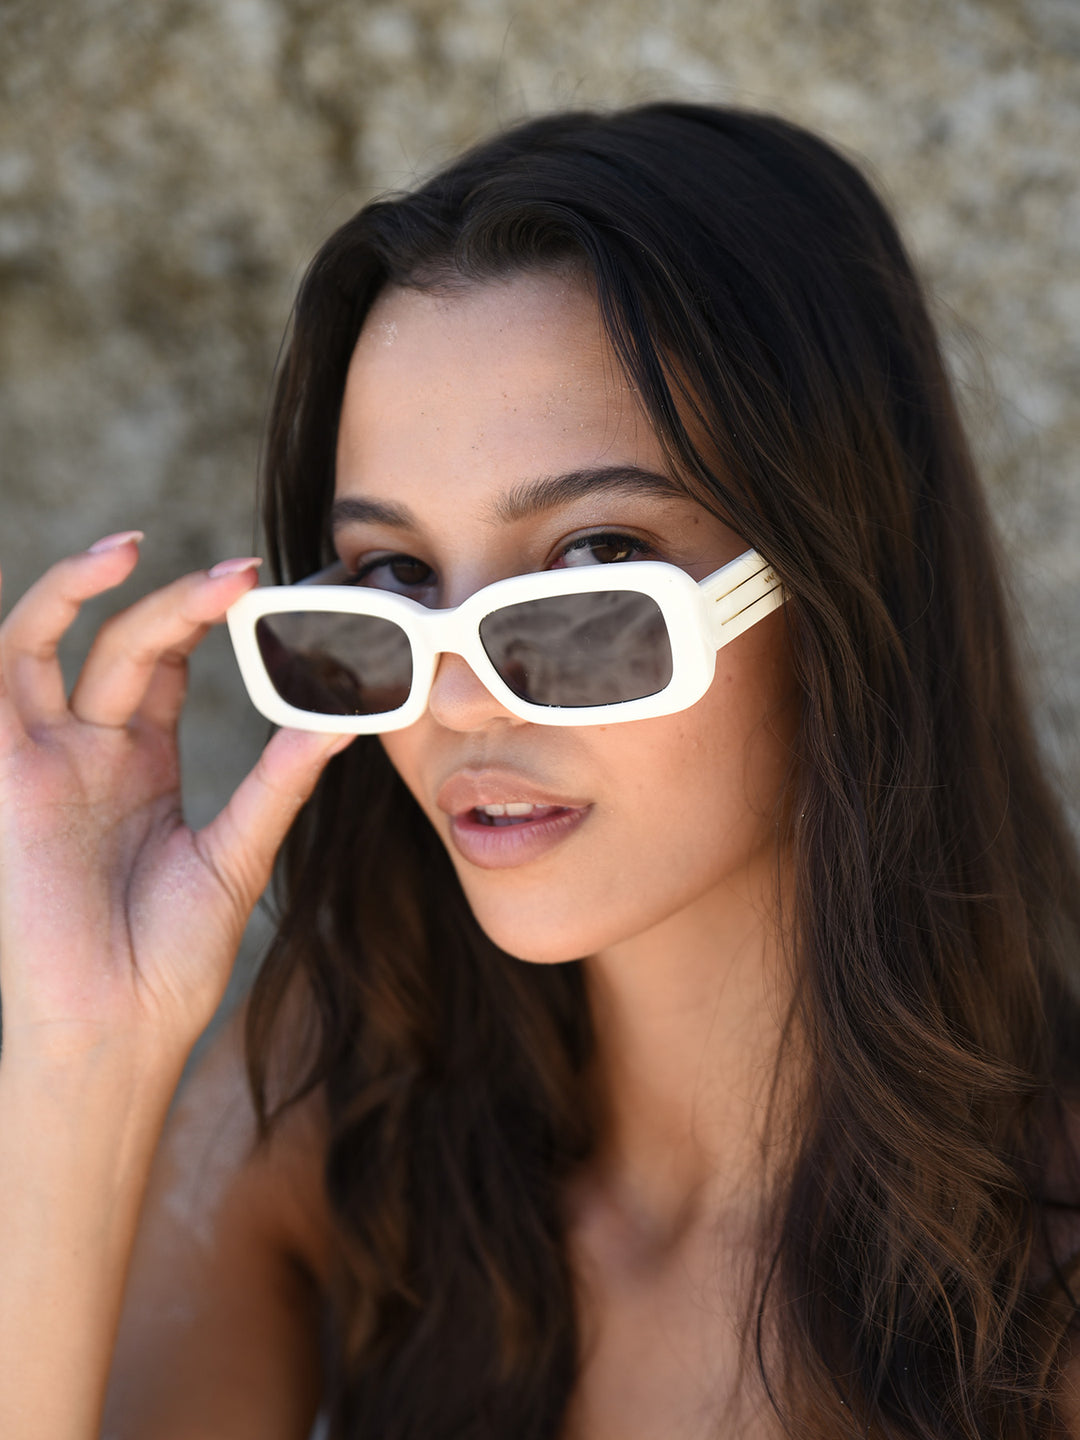 RETRO - Sunglasses • Cream White